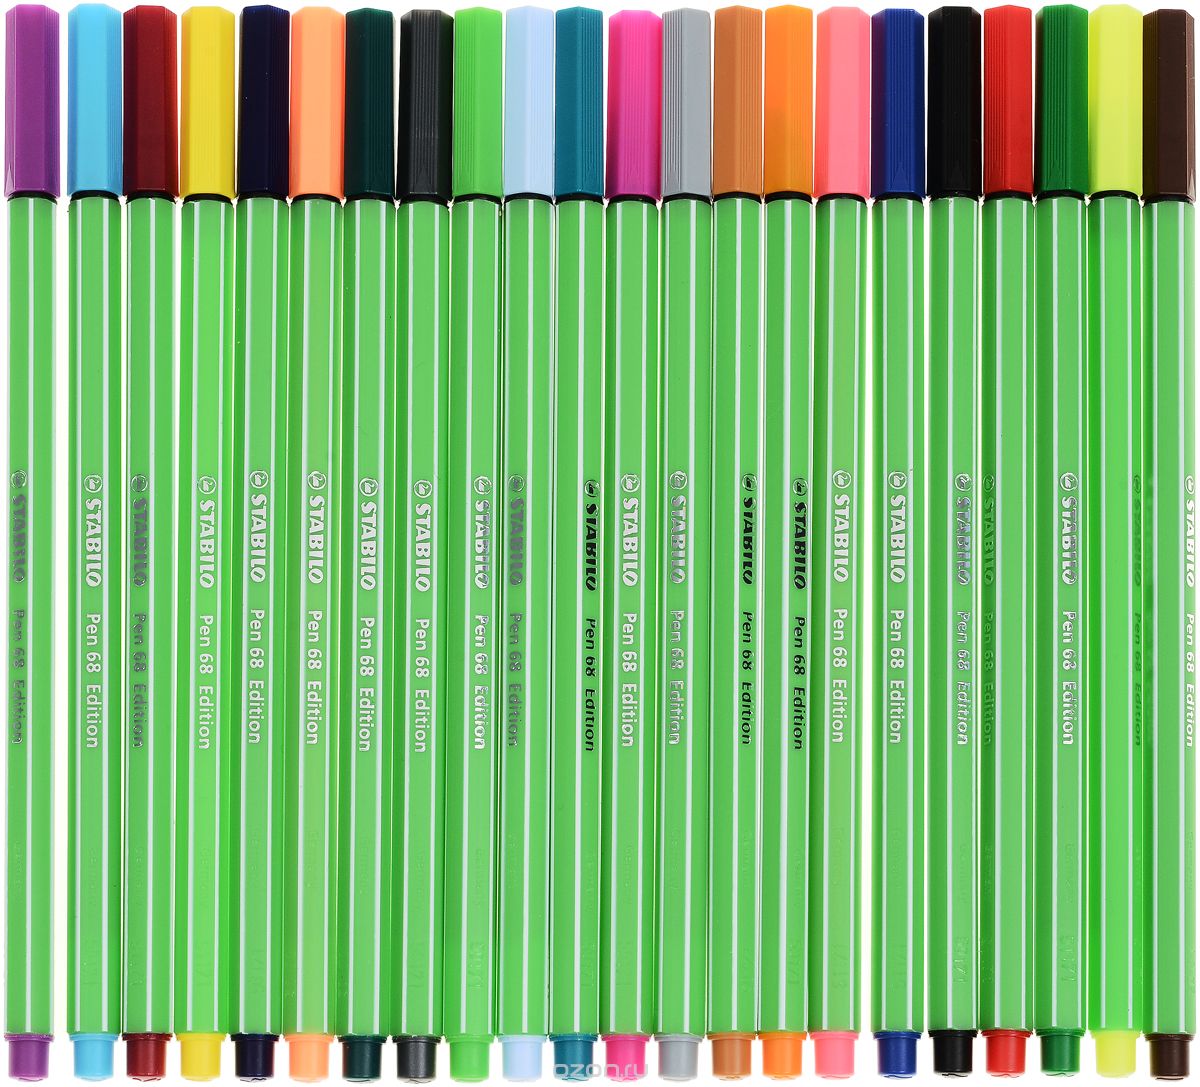 STABILO   Pen 68 Green Editional 22 